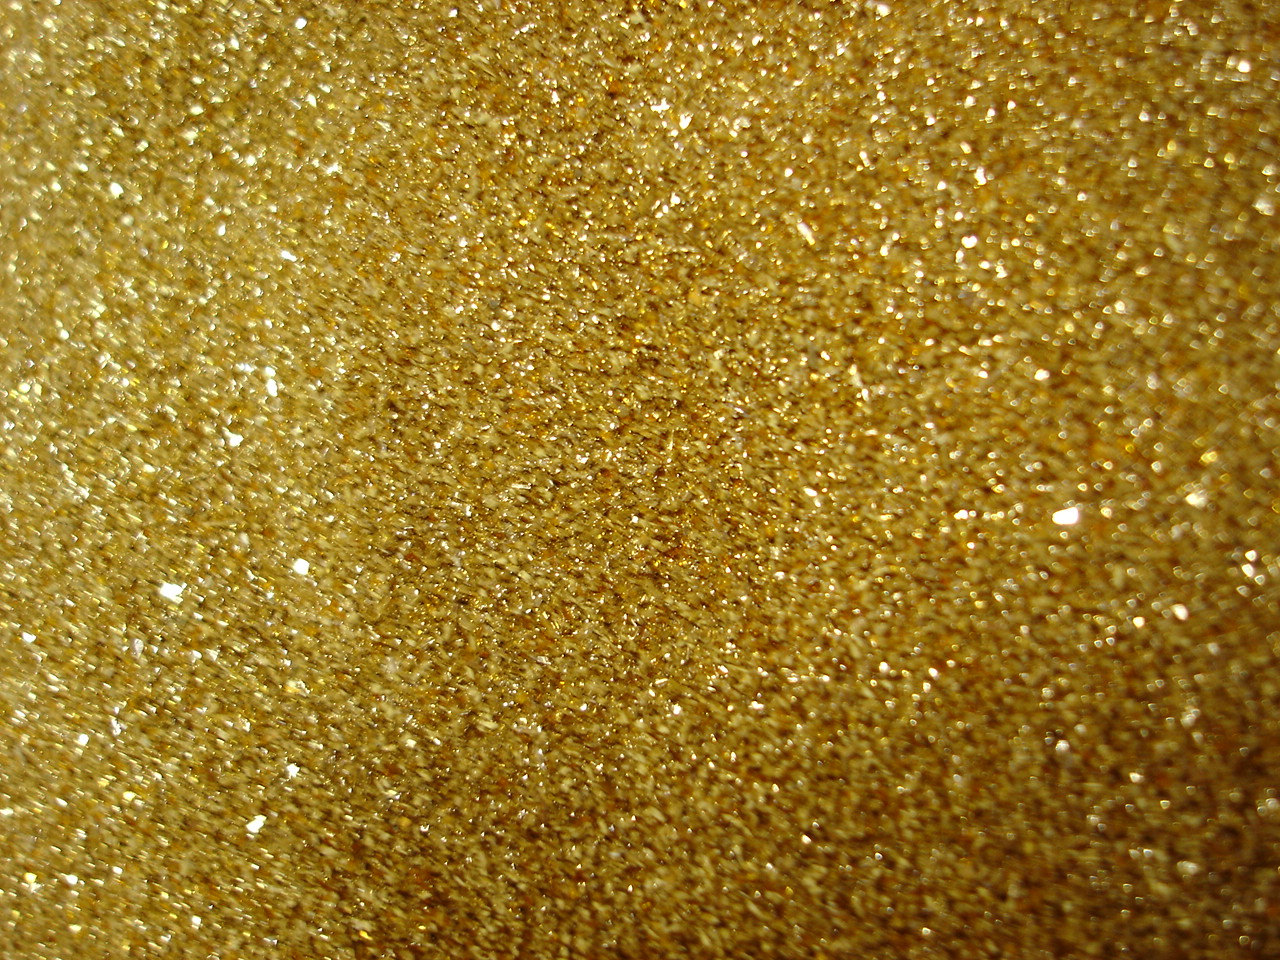 Gold Sparkle Wallpaper